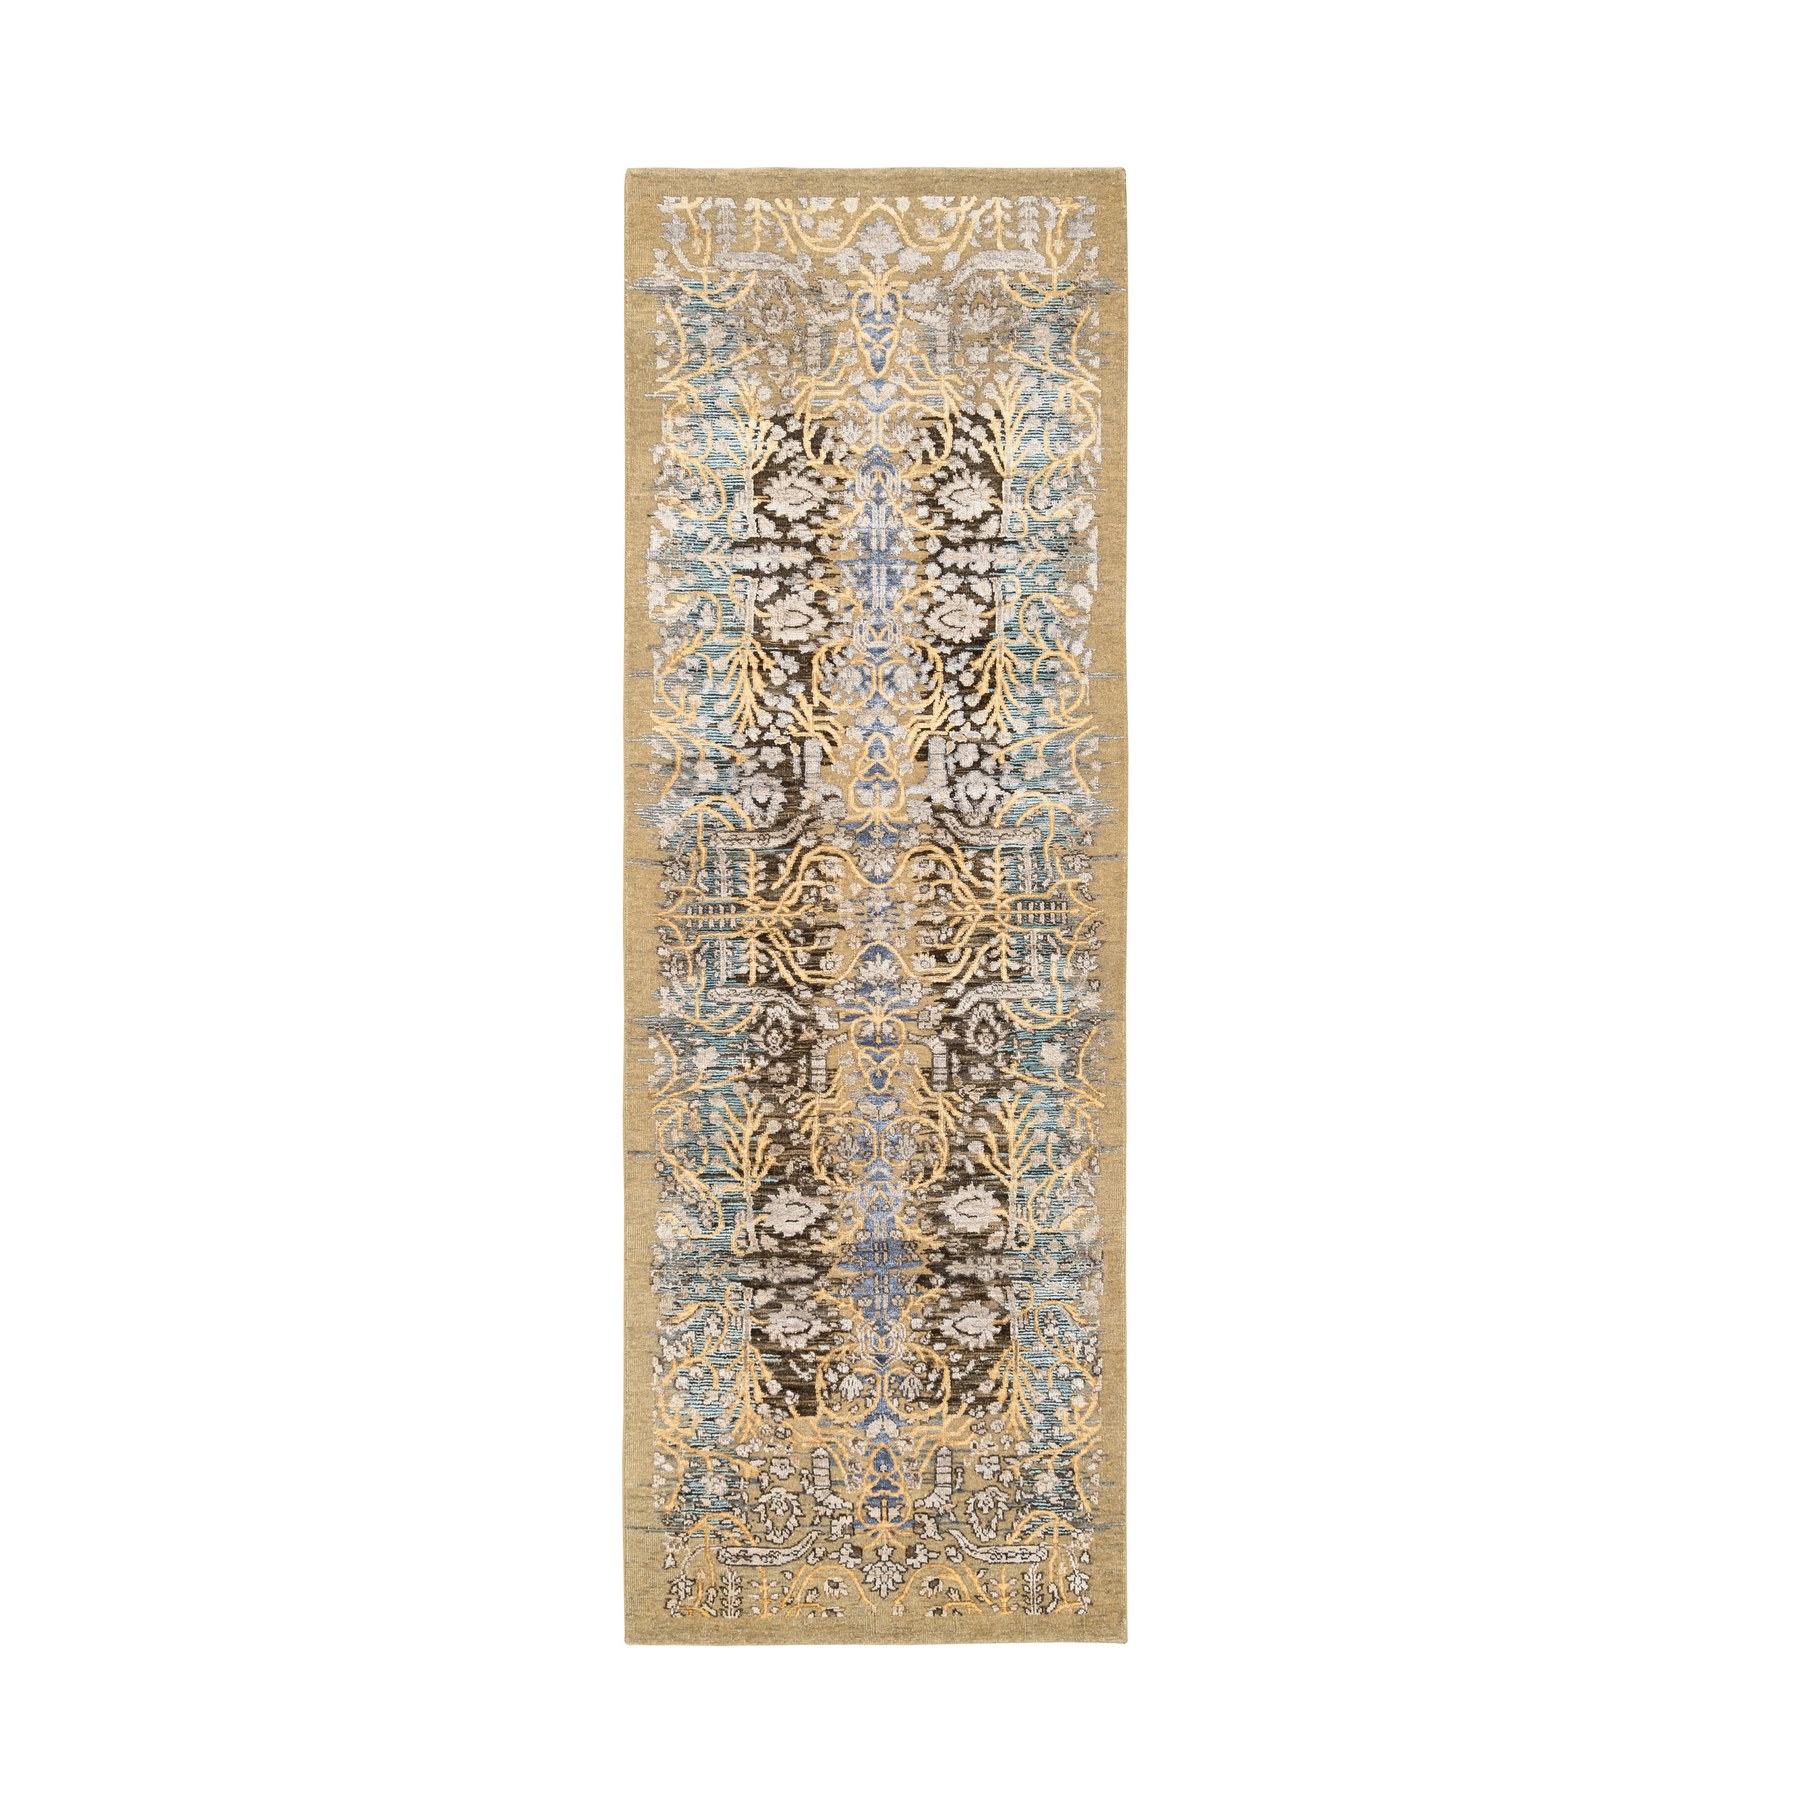 2'8"x8' Honey Brown, Silk With Textured Wool, Hand Woven, Transitional Sarouk, Oriental, Runner Rug 